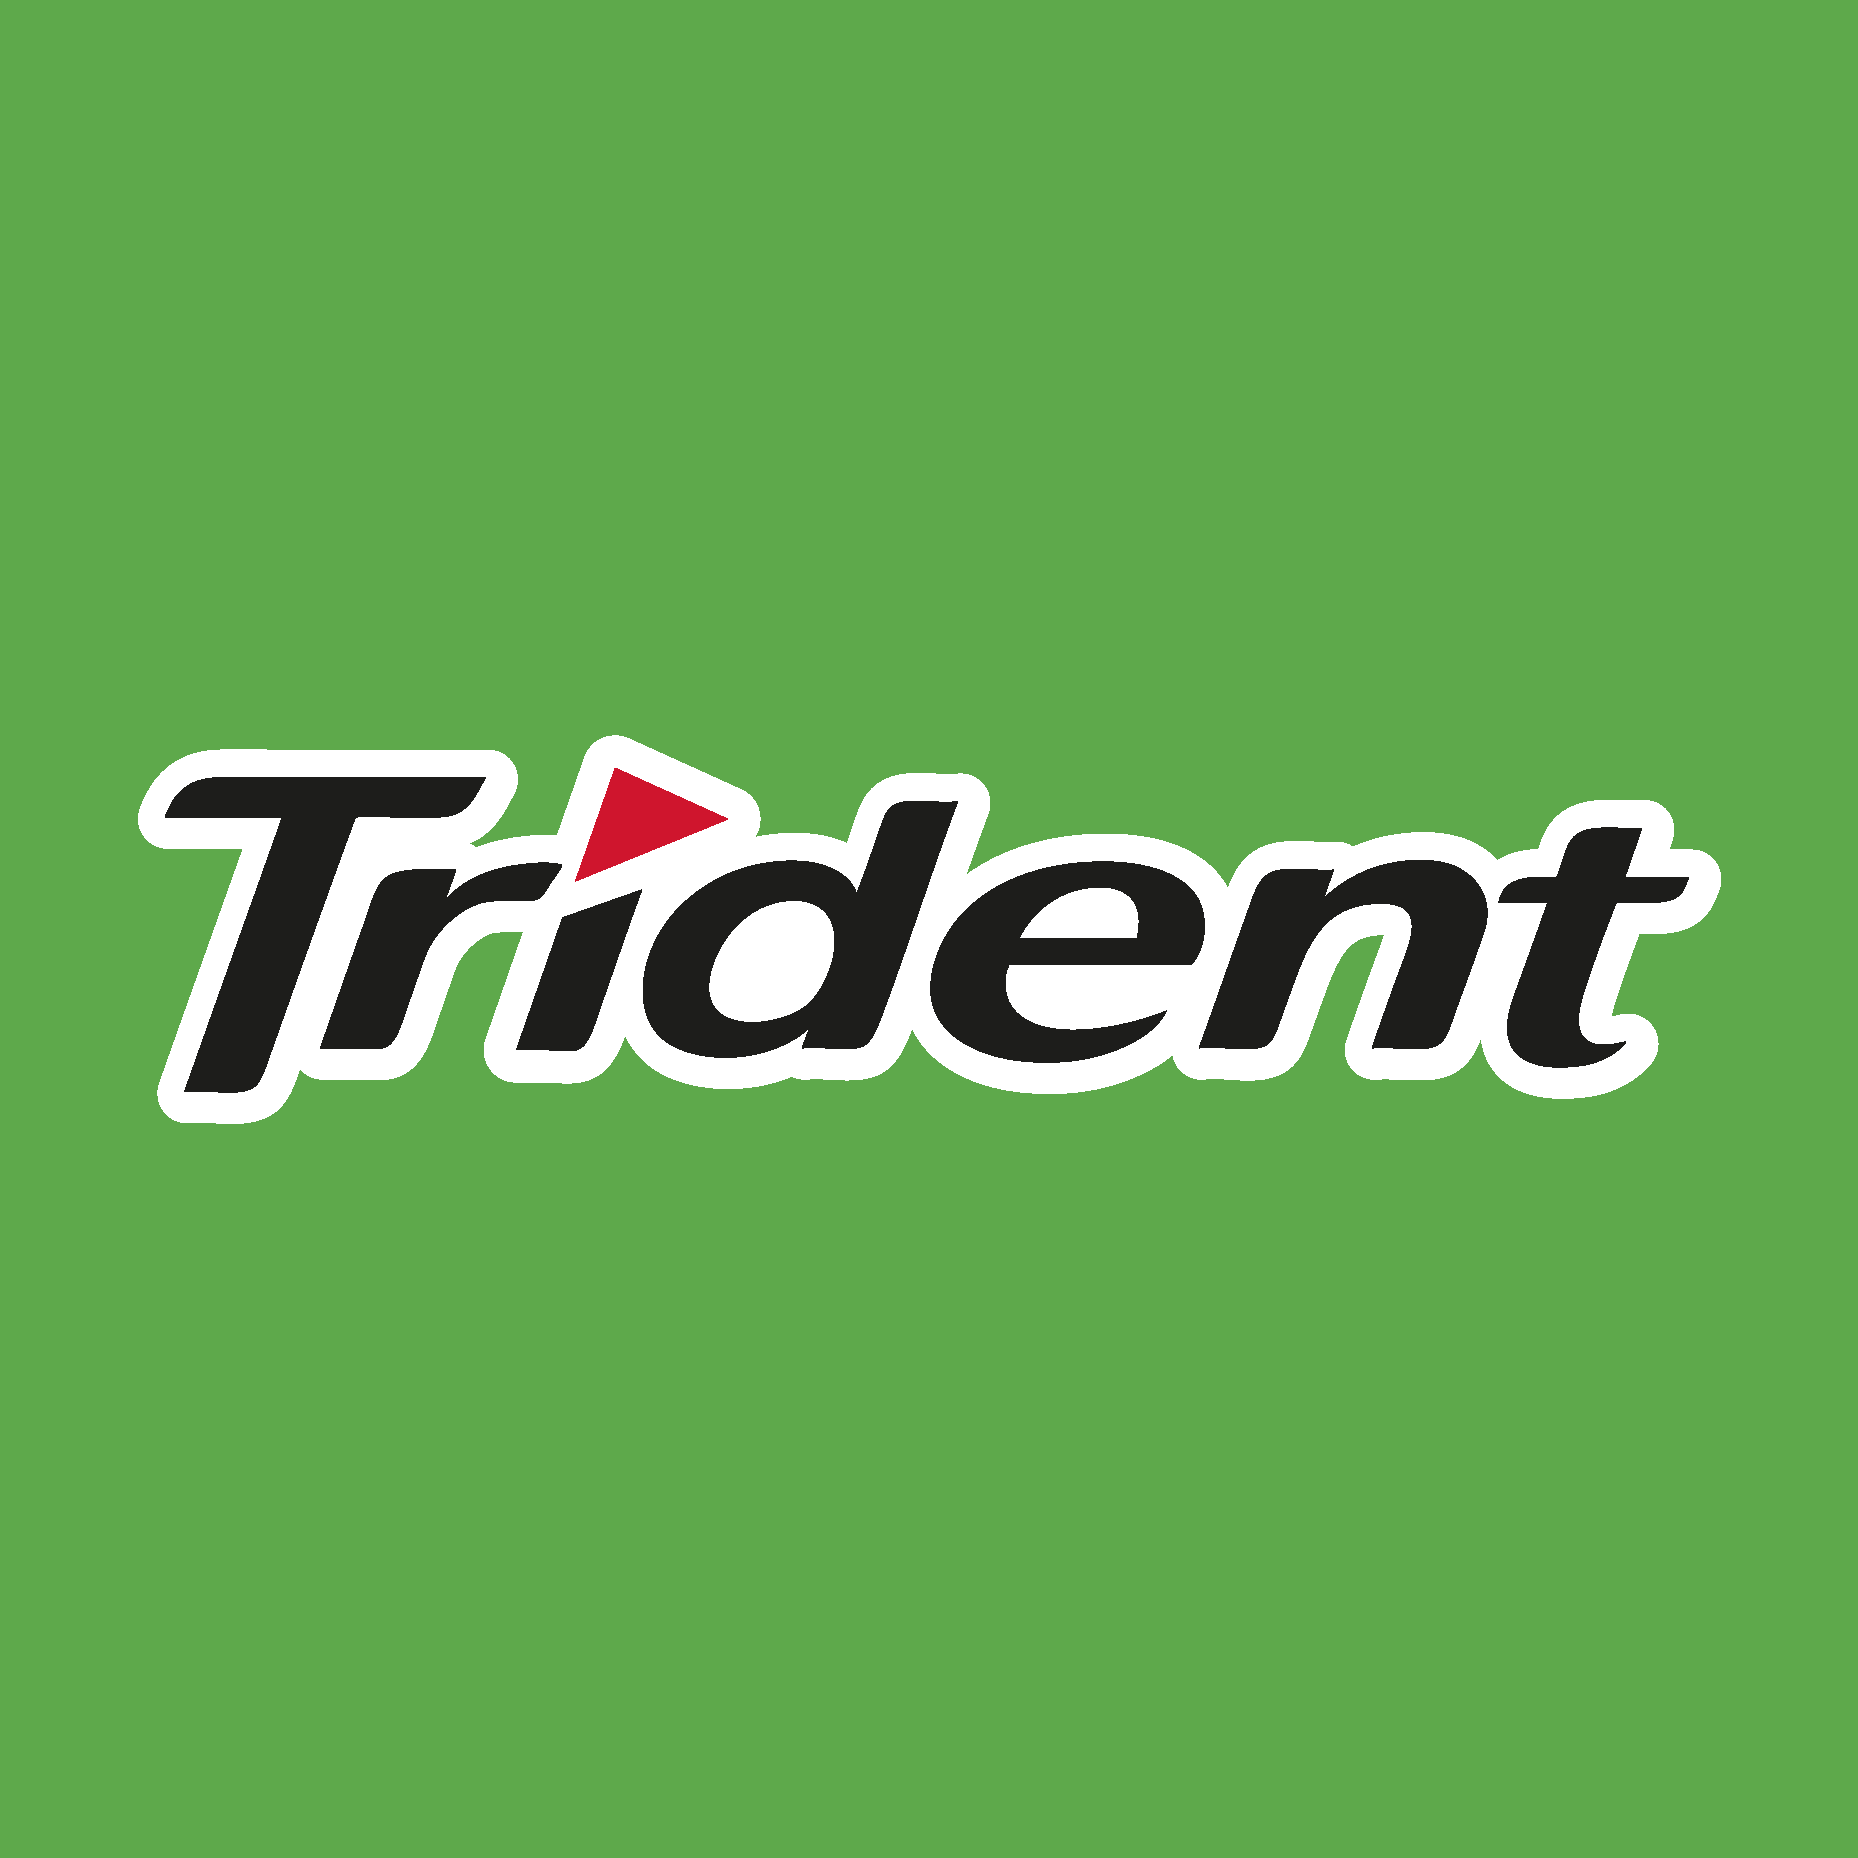 Trident script. Trident логотип. Trident жвачка лого. Trident Seafood logo. Лого Trident Max.